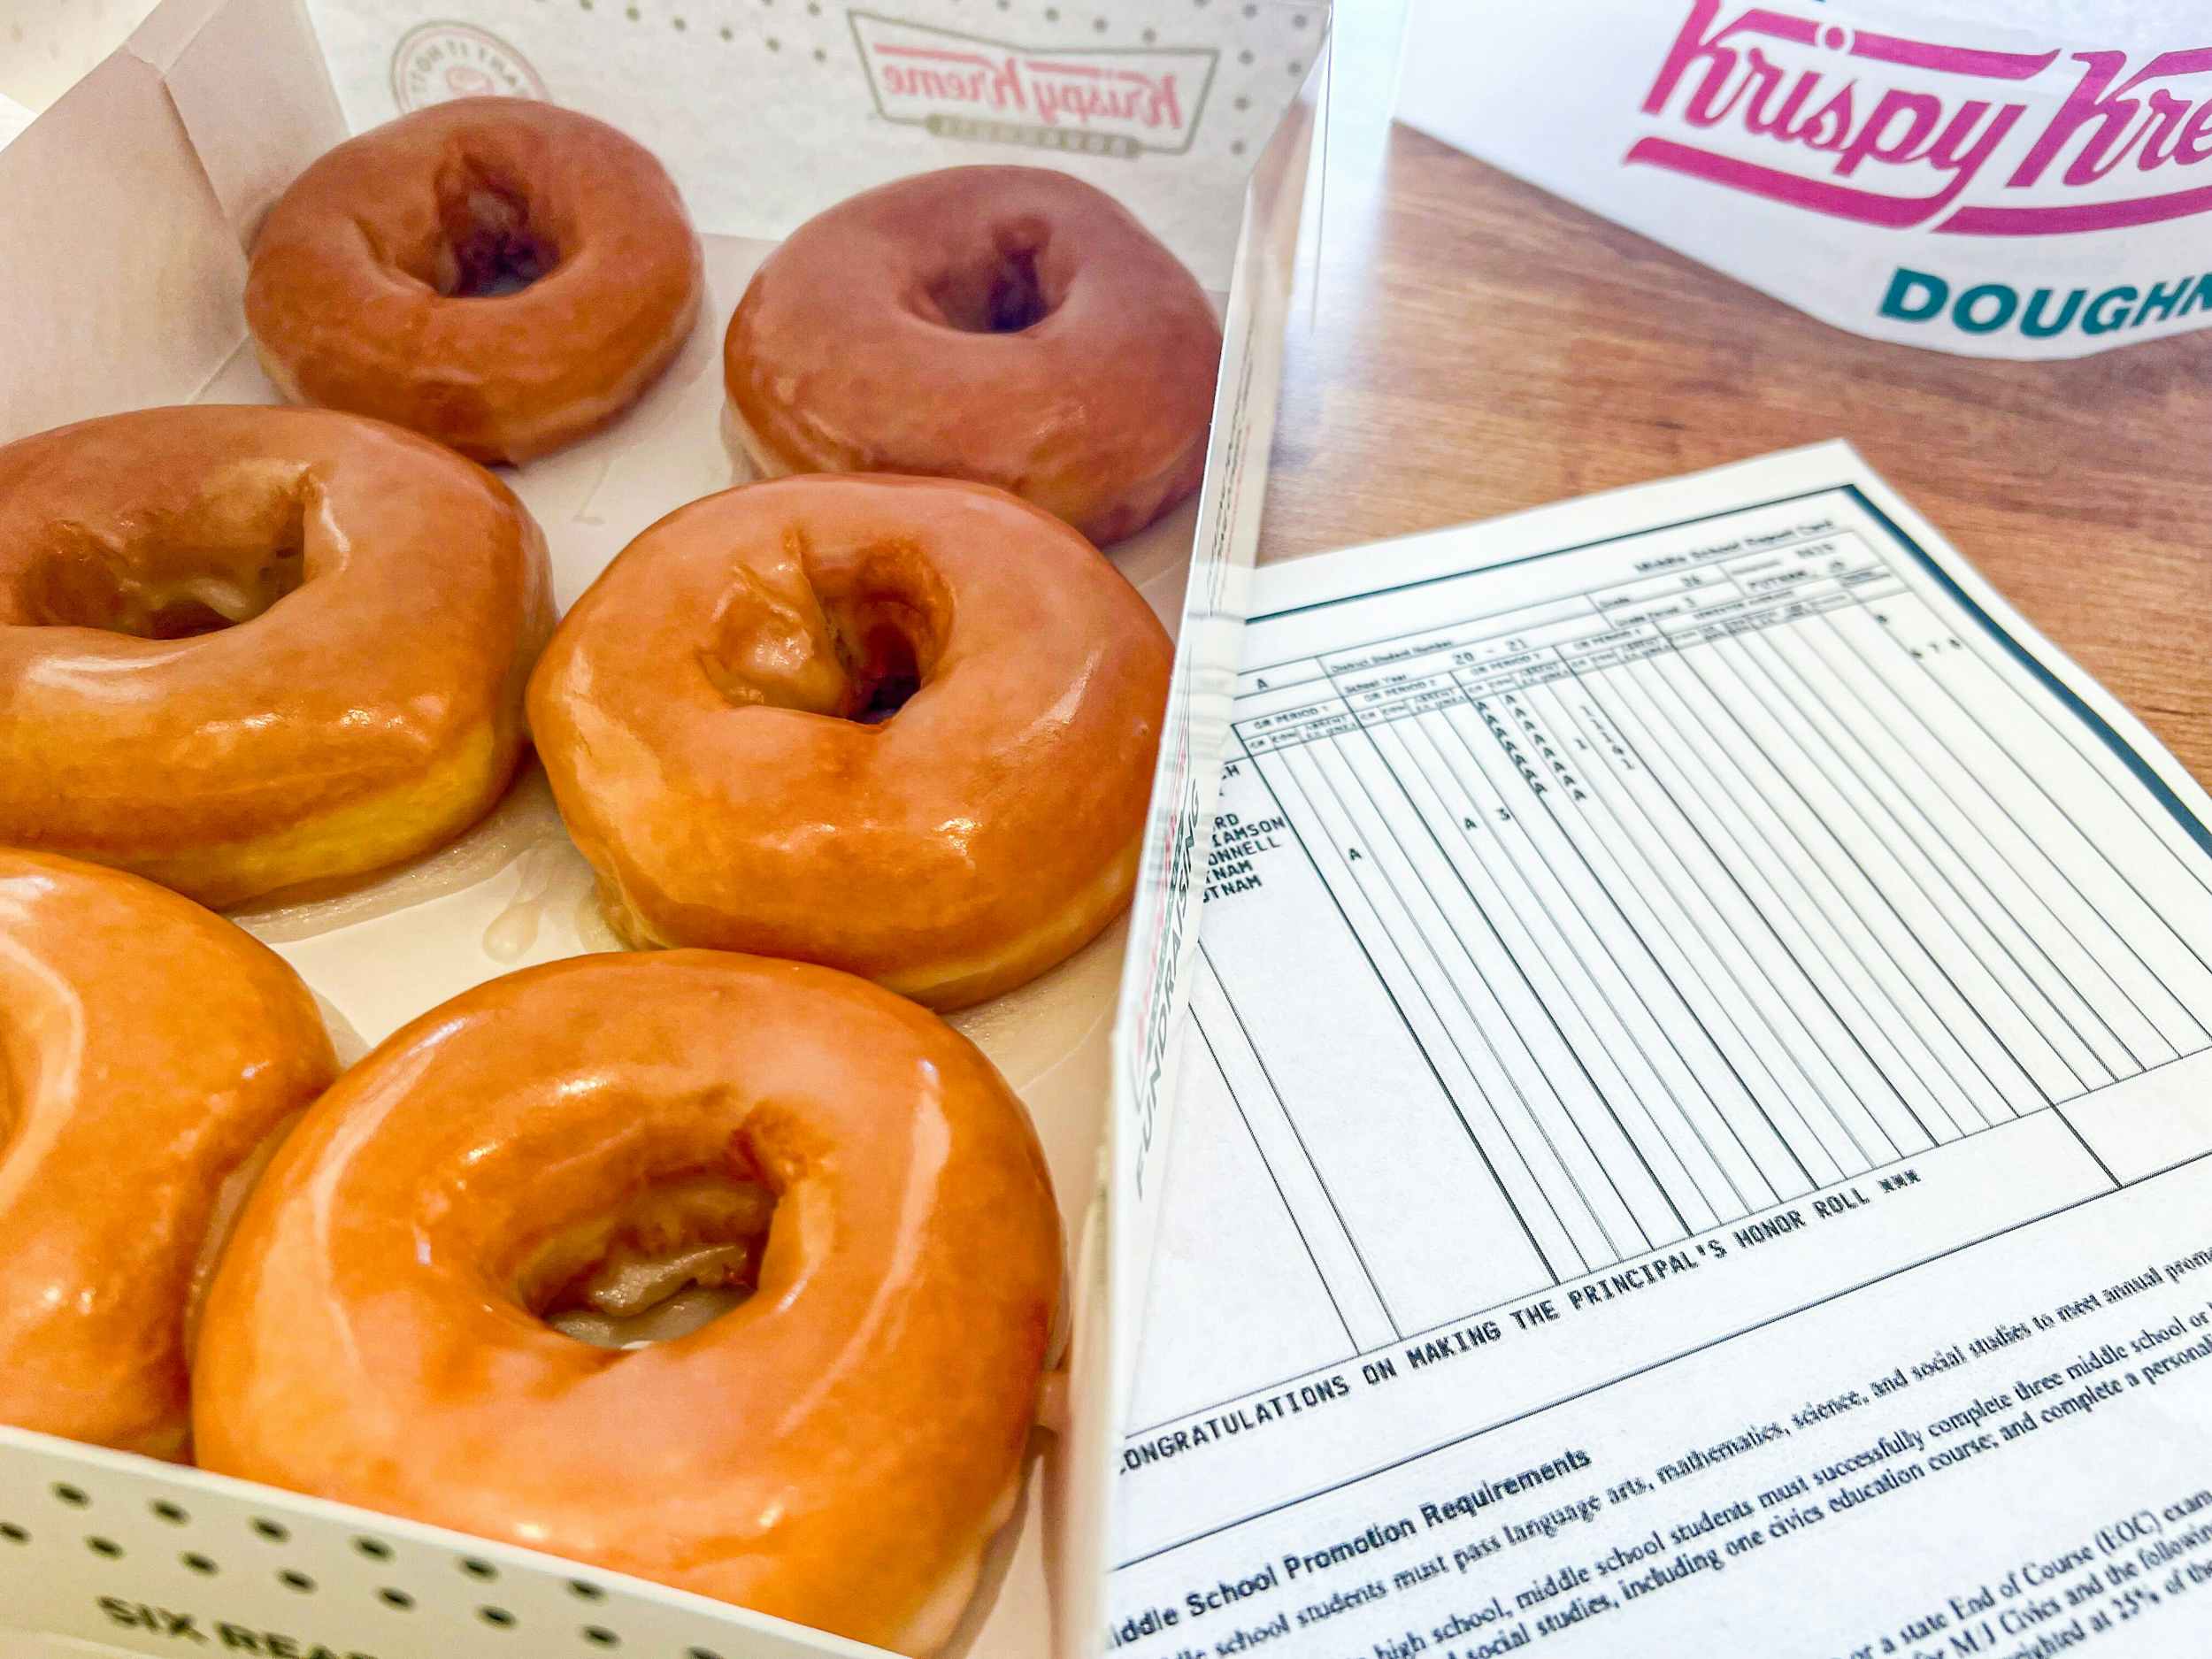 krispy kreme donuts next to a child's report card